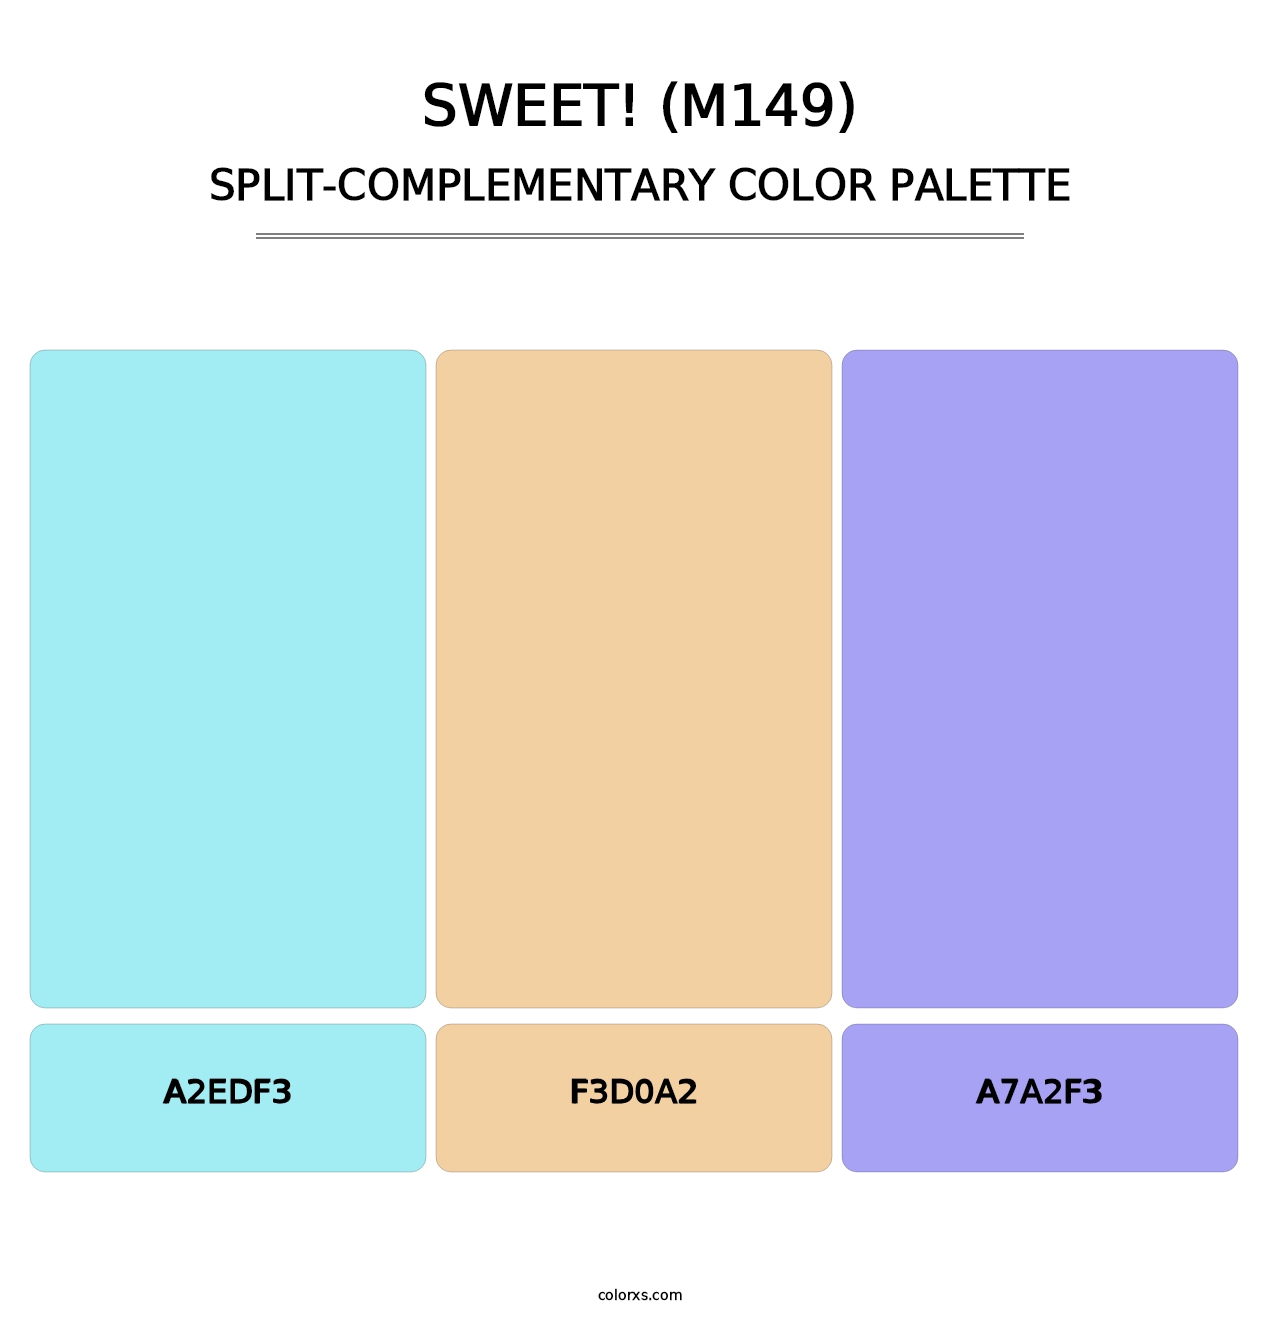 sweet! (M149) - Split-Complementary Color Palette